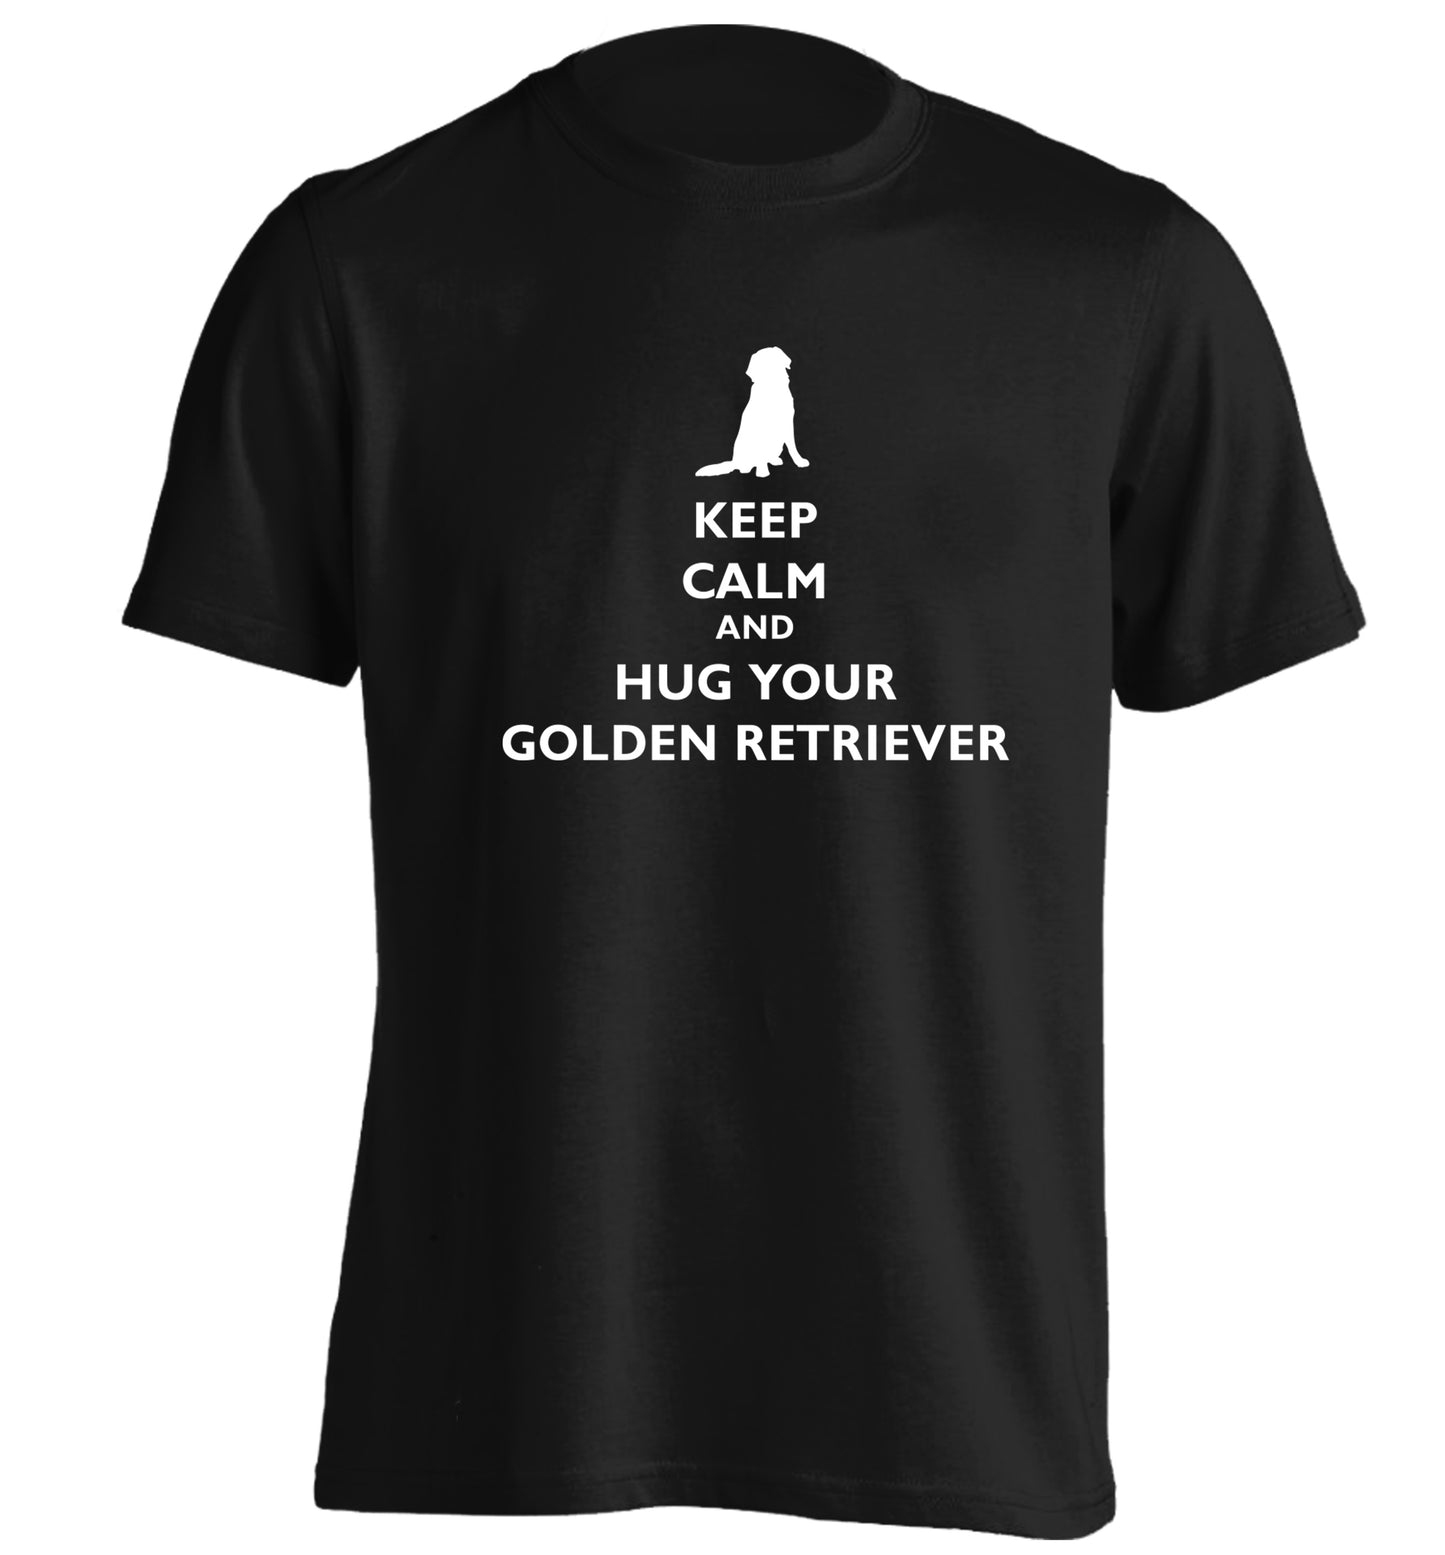 Keep calm and hug your golden retriever adults unisex black Tshirt 2XL